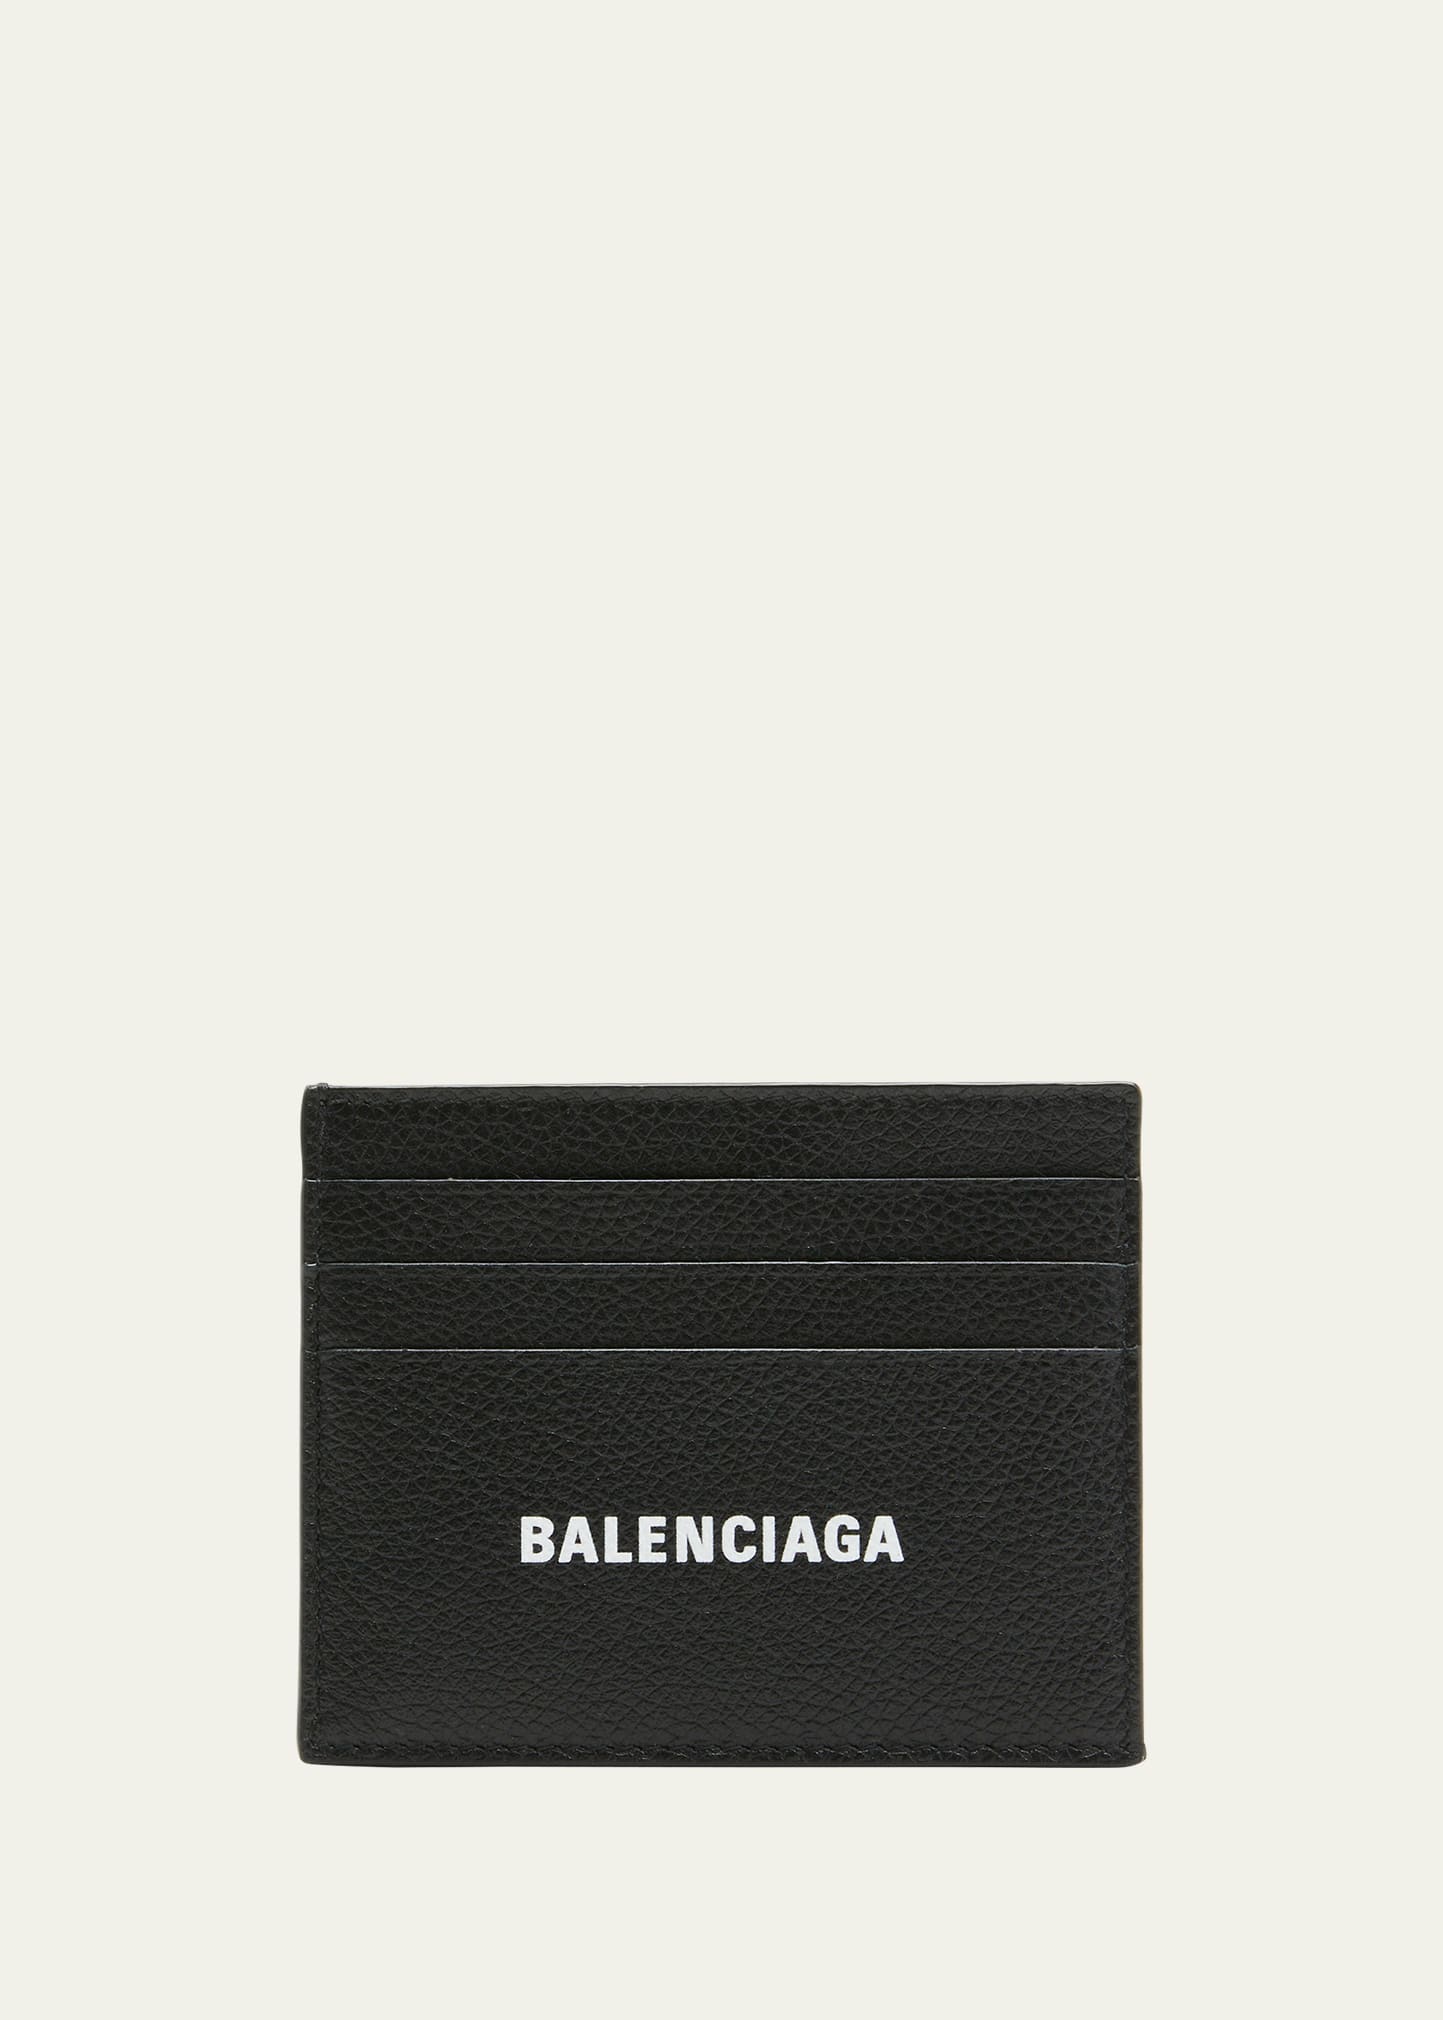 BALENCIAGA MEN'S LEATHER CASH-CARD HOLDER